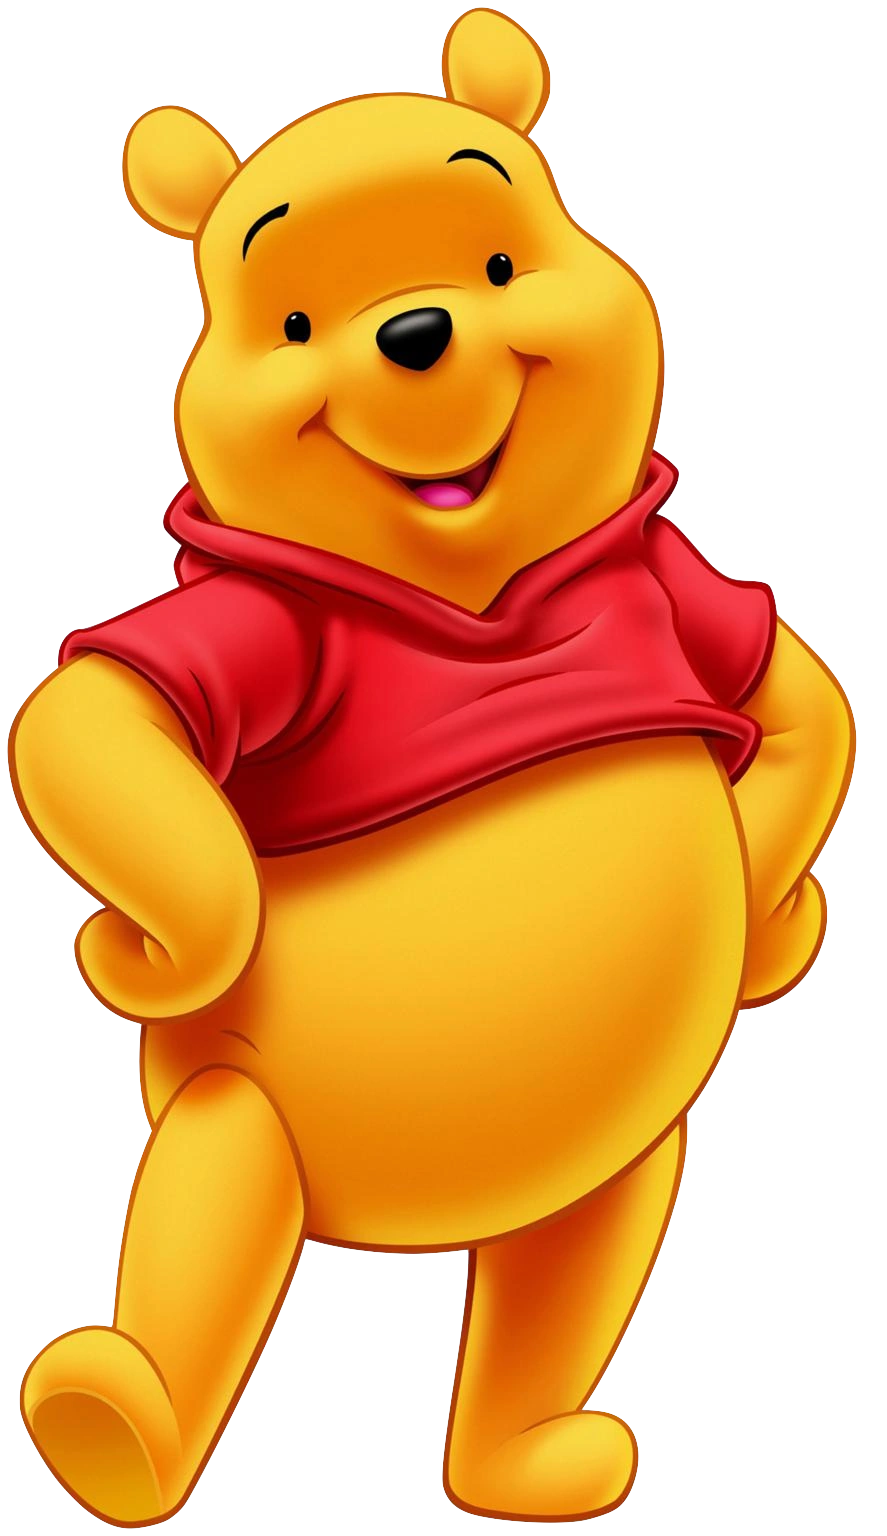 Image of Winnie The Pooh